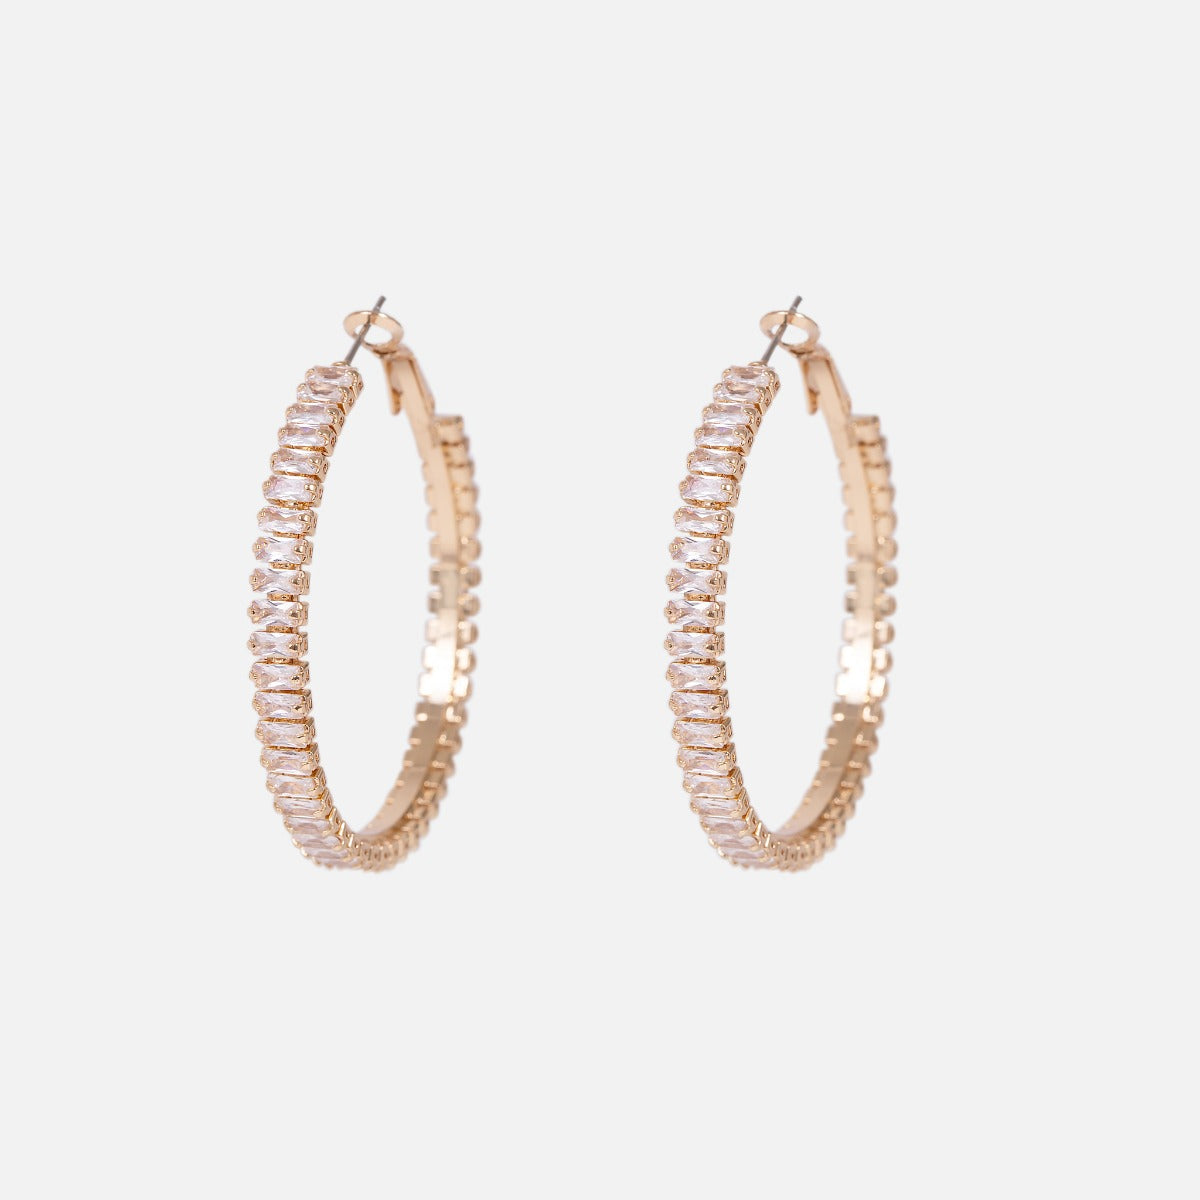 Wide golden hoop earrings with sparkling stones